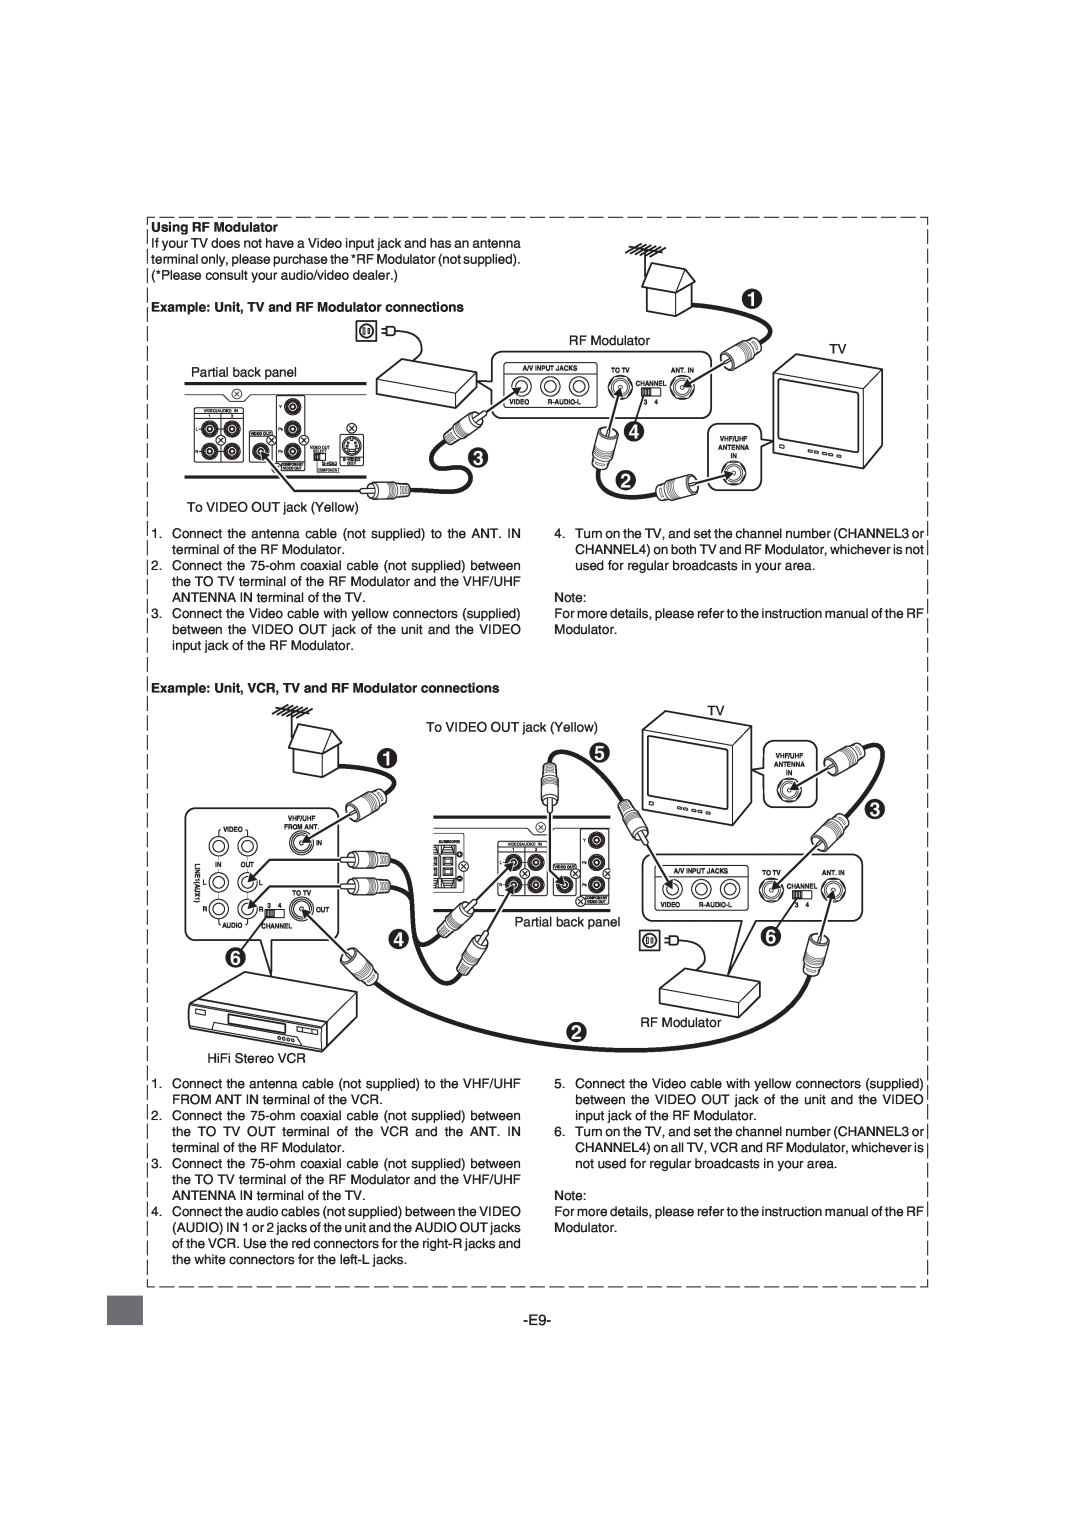 Sanyo DWM-2600 instruction manual Using RF Modulator, Example Unit, TV and RF Modulator connections, Partial back panel 